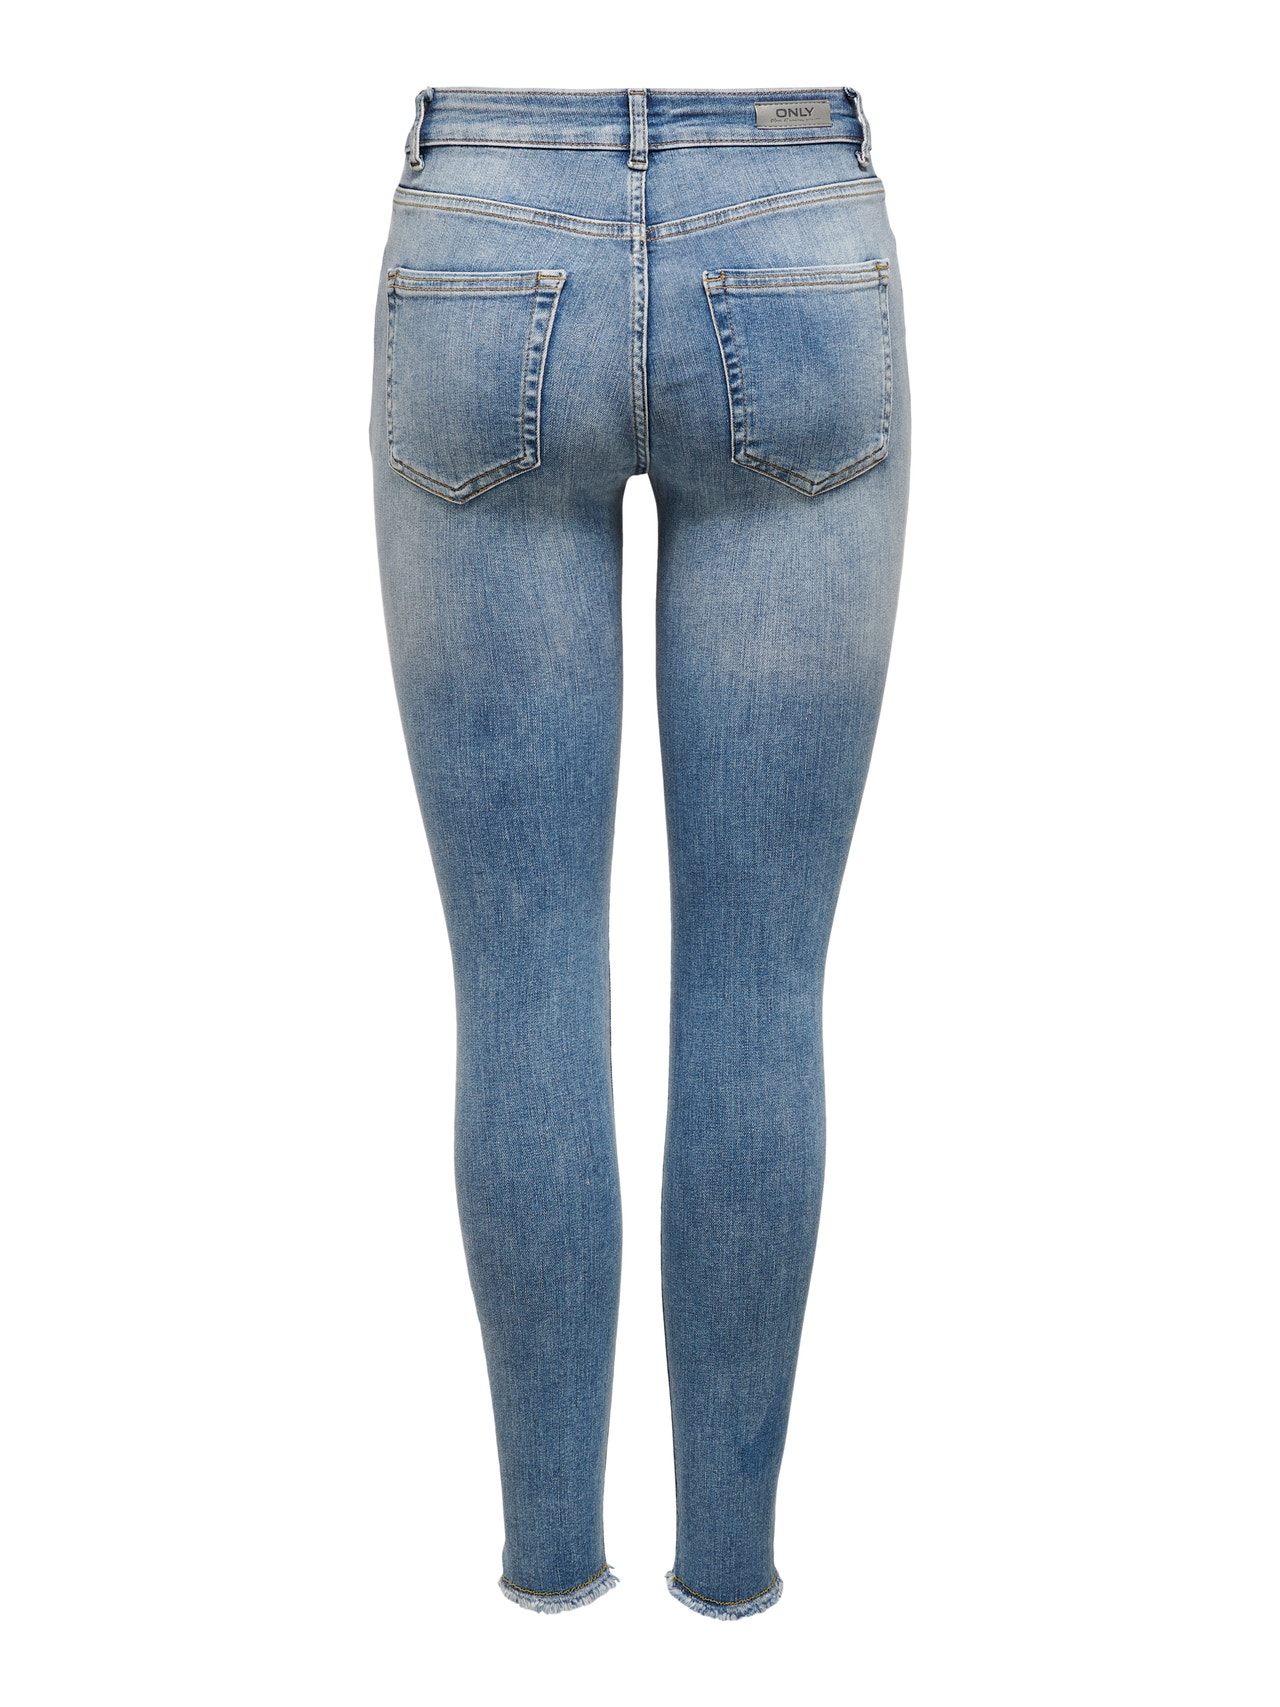 ONLY Jeans Skinny Fit Taille moyenne Ourlets déchirés -Light Blue Denim - 15151895